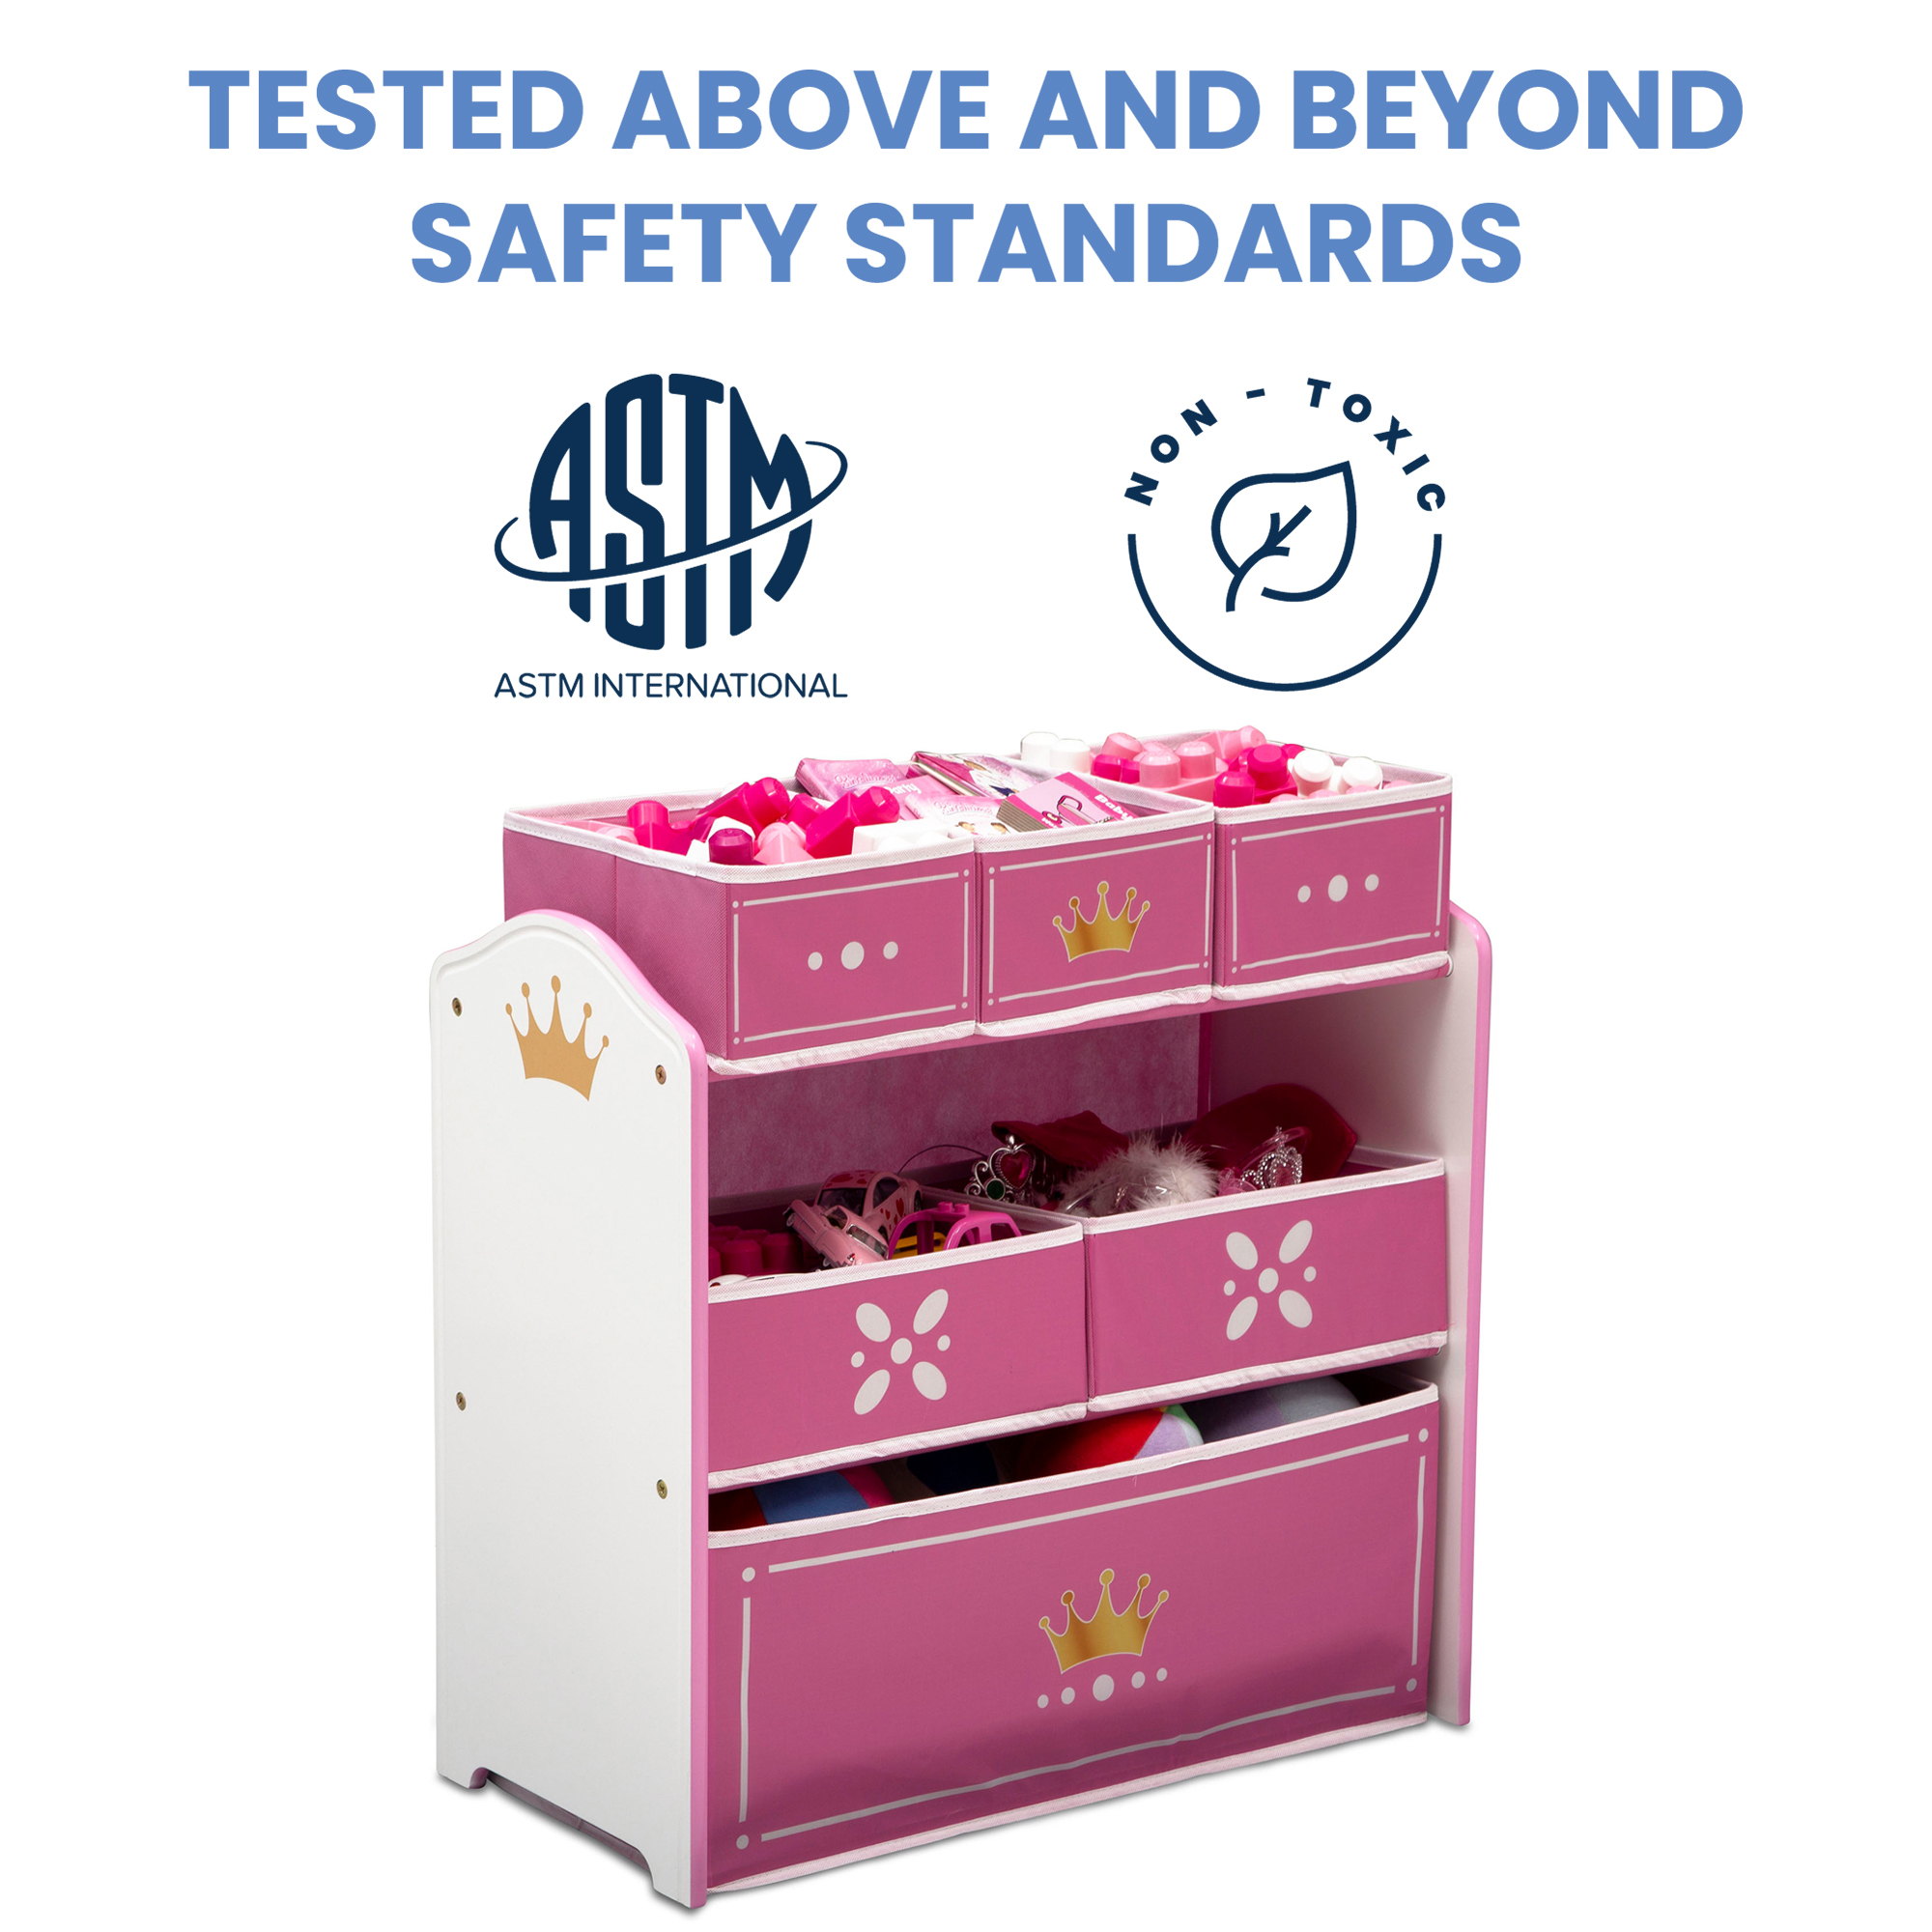 Delta Children Princess Crown 6 Bin Storage Toy Organizer, Greenguard Gold Certified, Solid Wood & Fabric, White/Pink - image 4 of 7